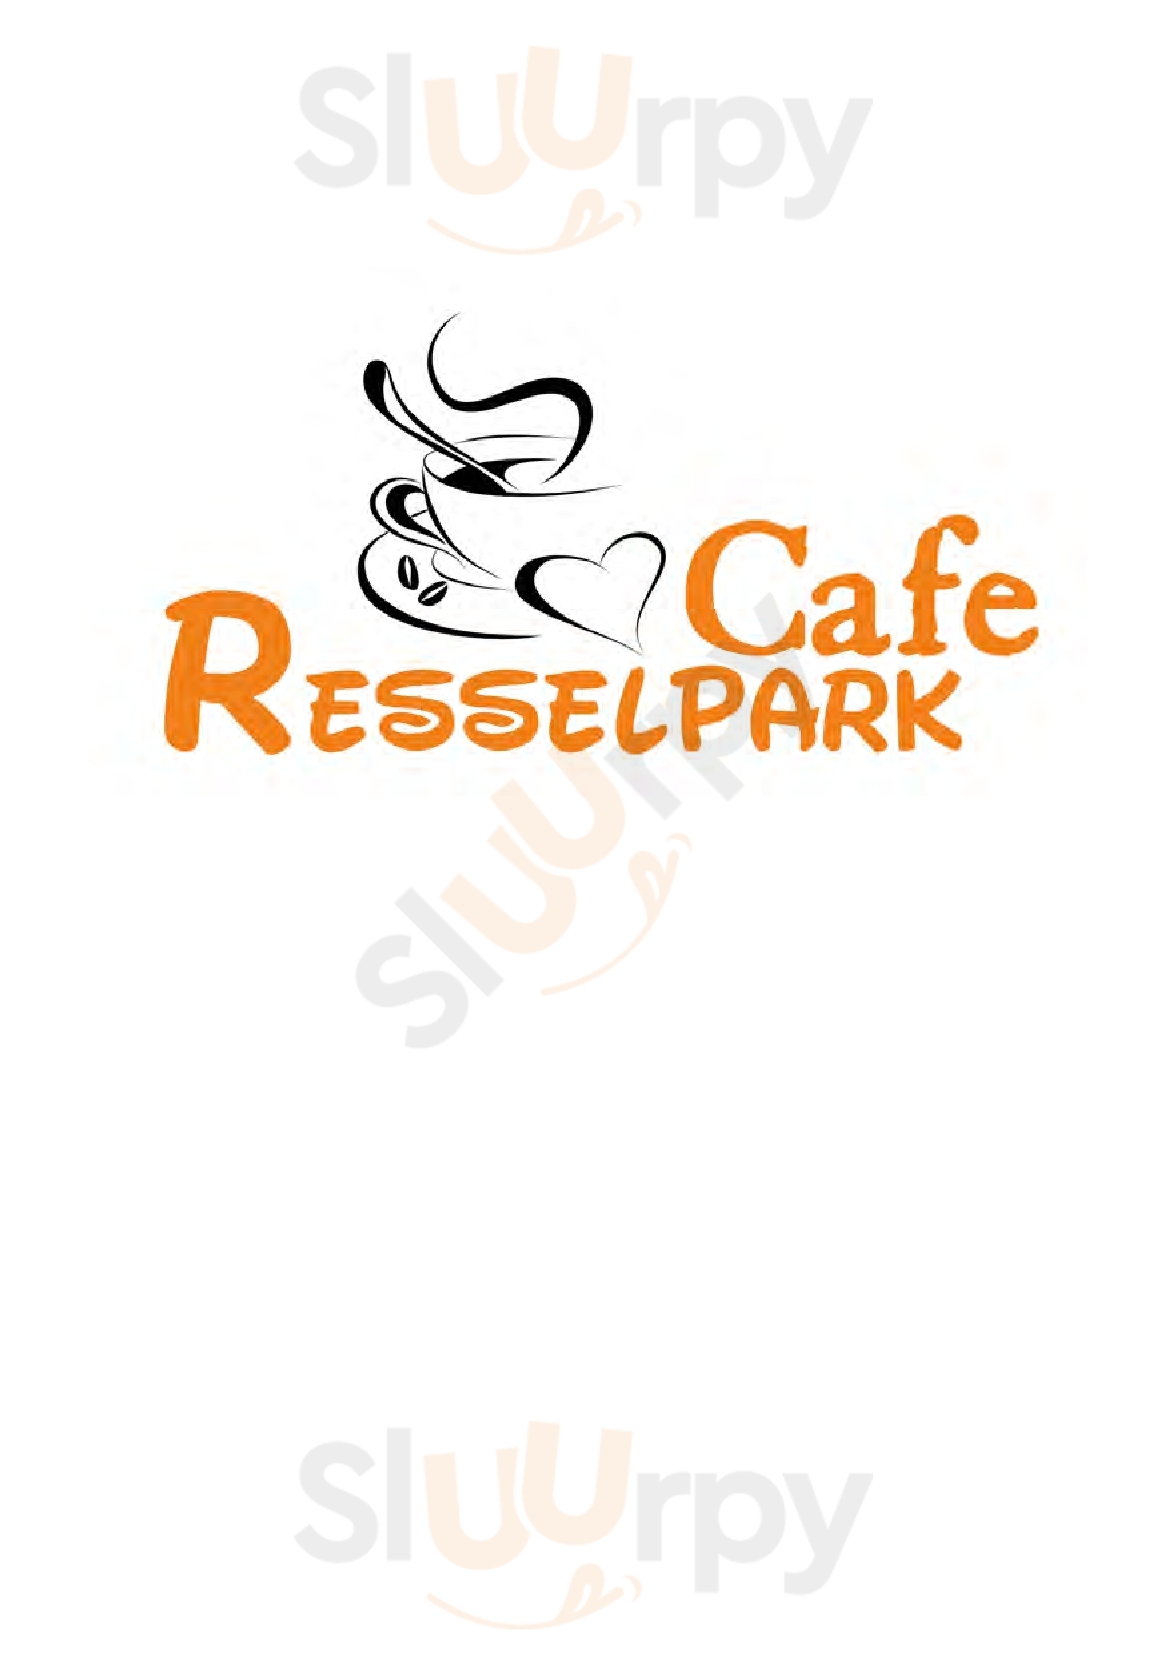 Cafe-restaurant Resselpark Wien Menu - 1